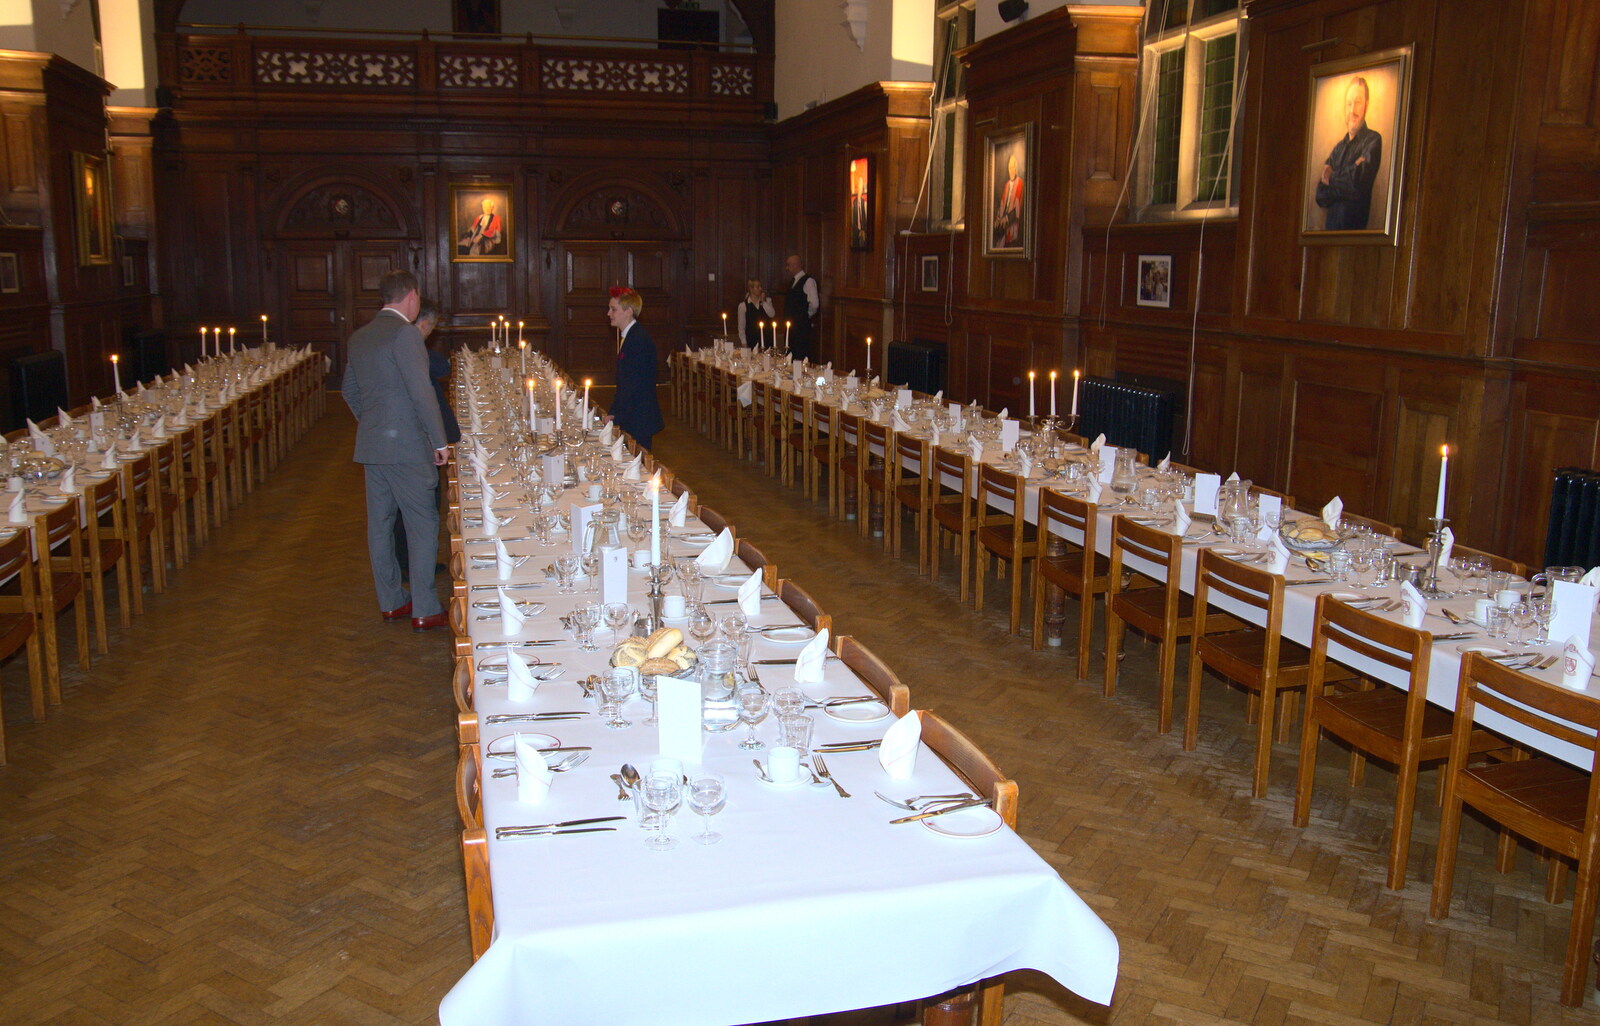 Selwyn College's dining hall from SwiftKey's Ten Year Anniversary Reunion, Selwyn College, Cambridge - 11th January 2019